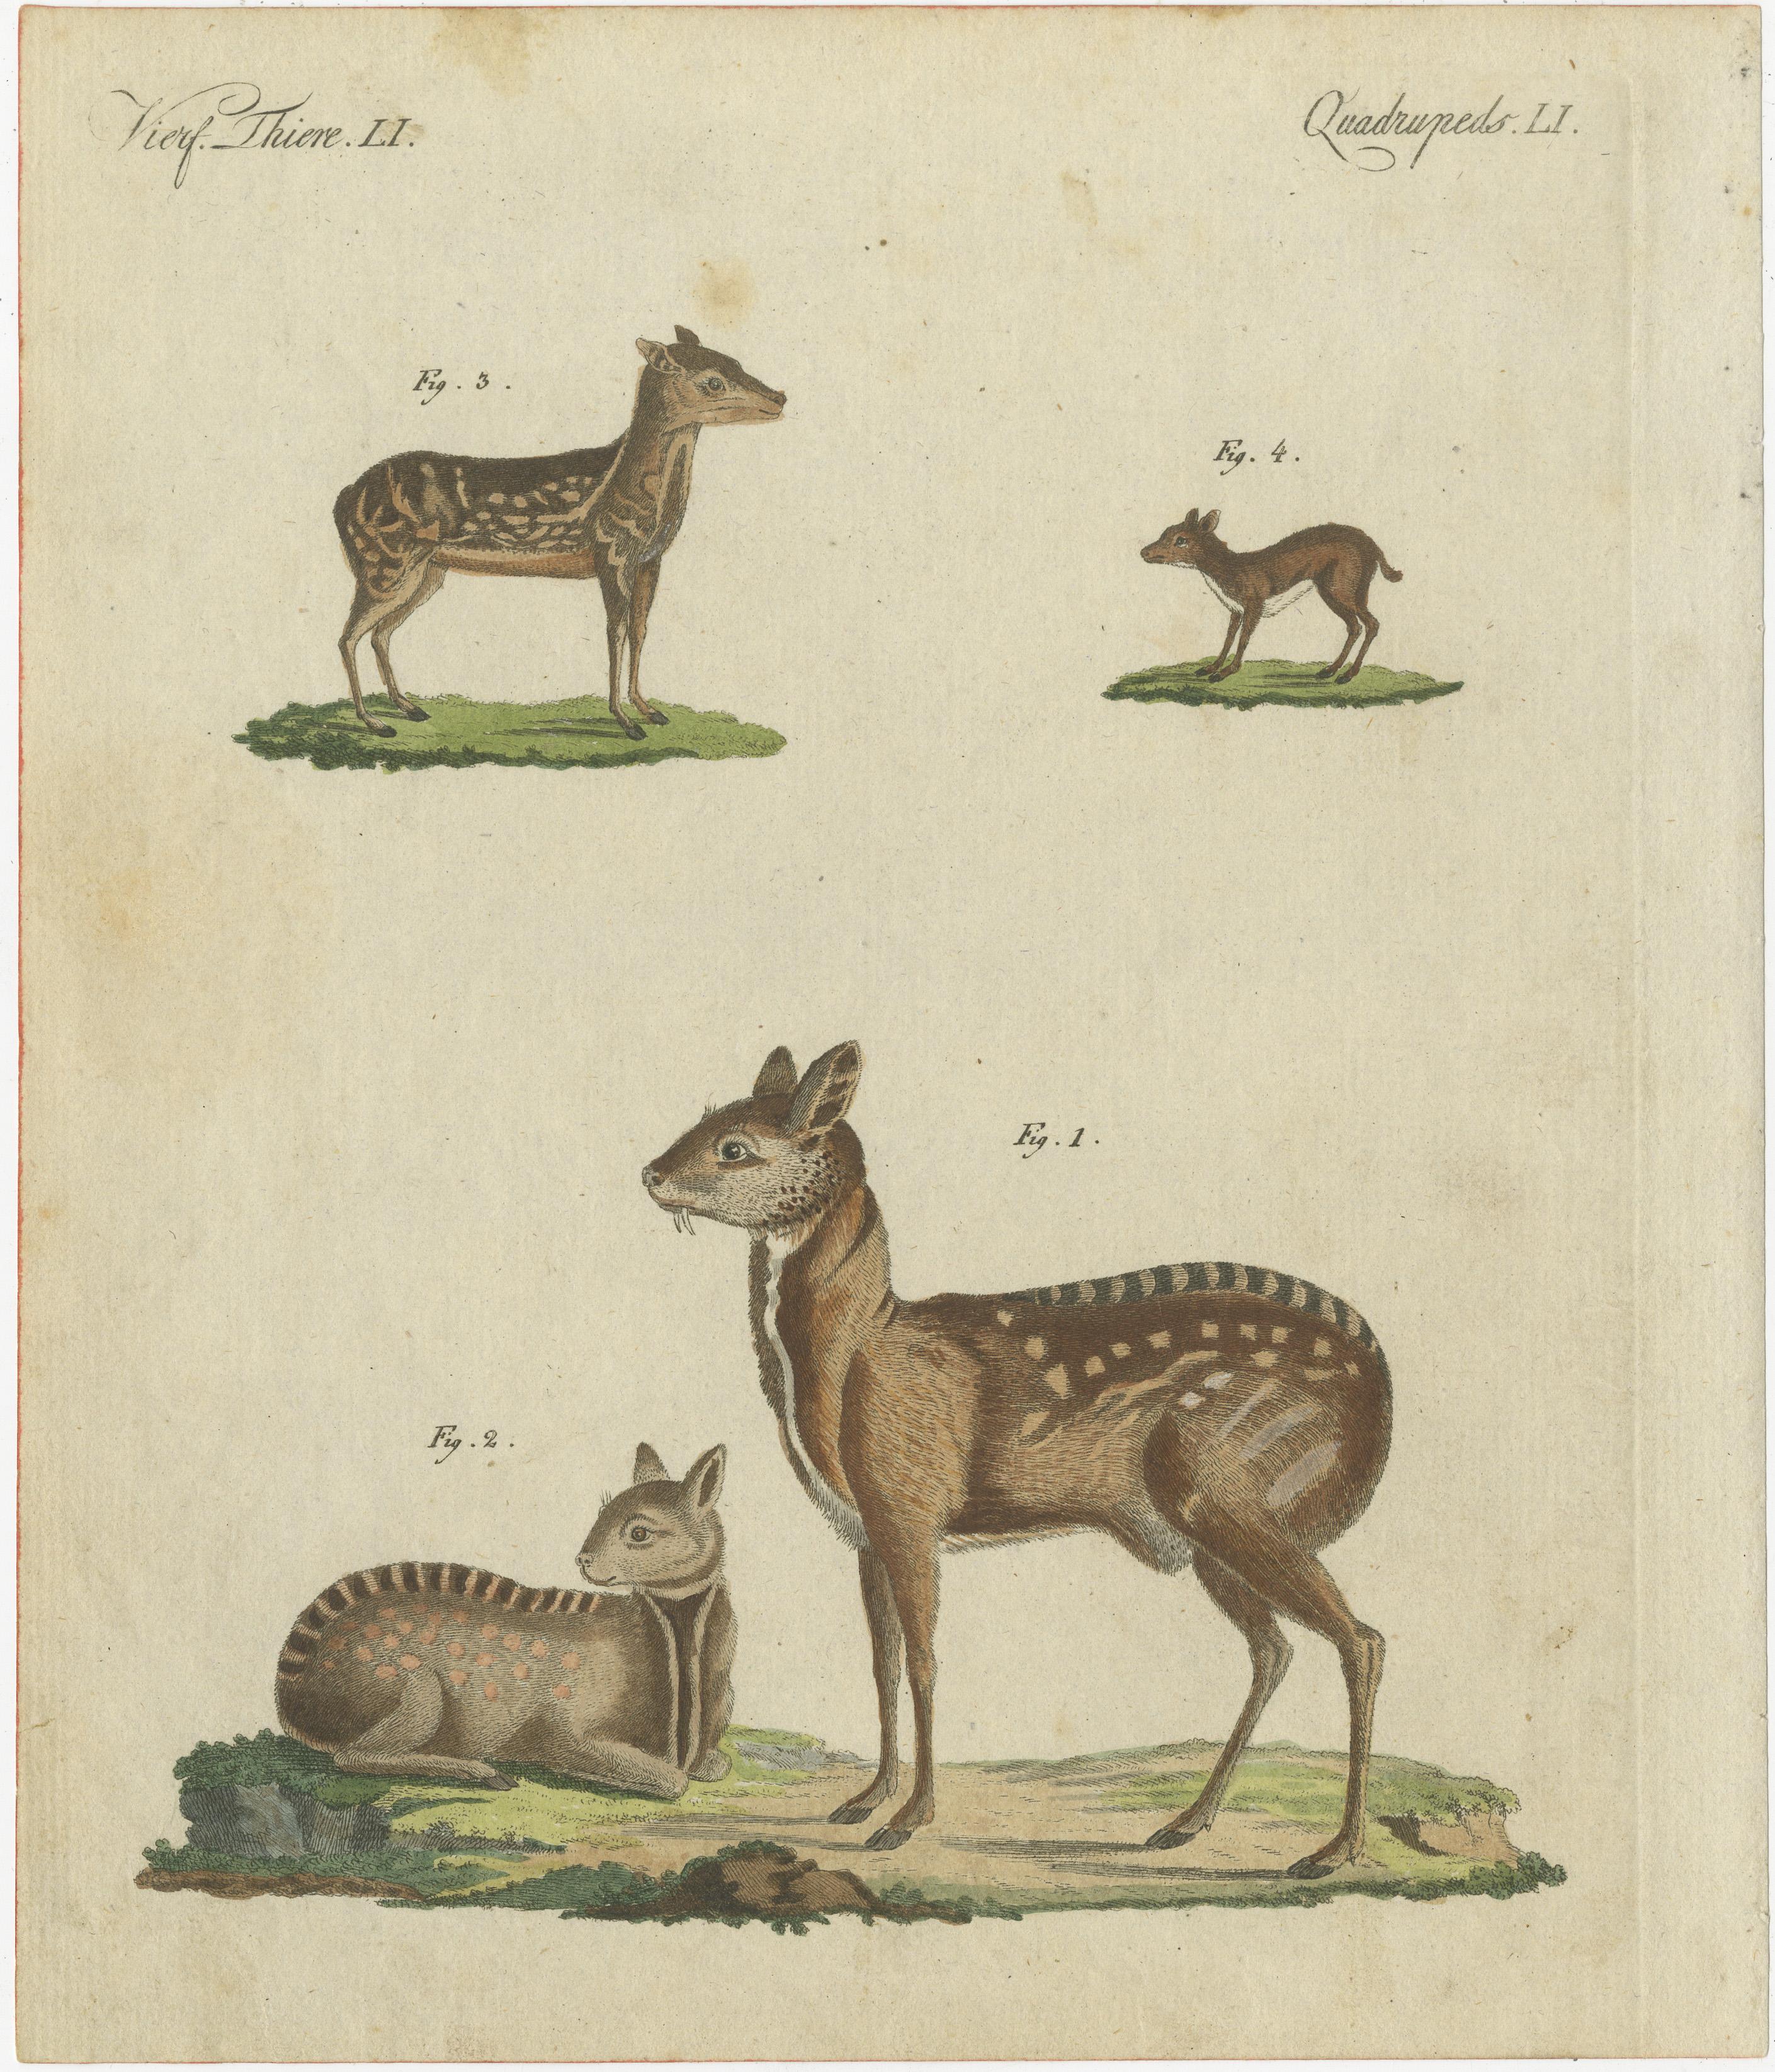 This original antique print shows the Siberian musk deer, Moschus moschiferus (male 1, female 2), Napu musk deer, Tragulus javanicus Moschus indicus 3, and royal antelope, Neotragus pygmaeus 4.

Originates from Bertuch's 'Bilderbuch für Kinder'.